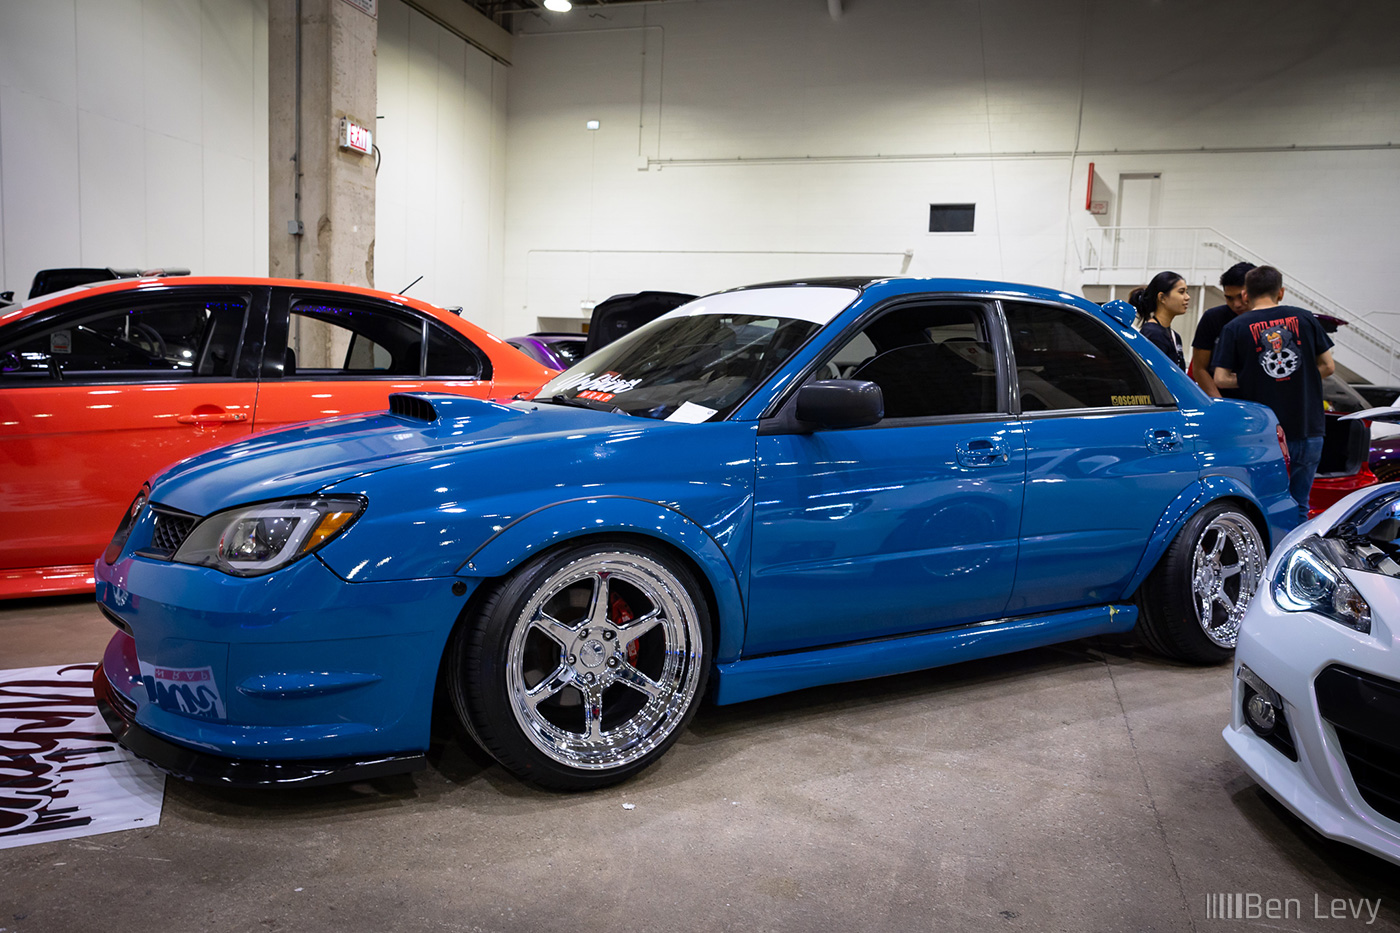 Blue Wrapped Subaru WRX